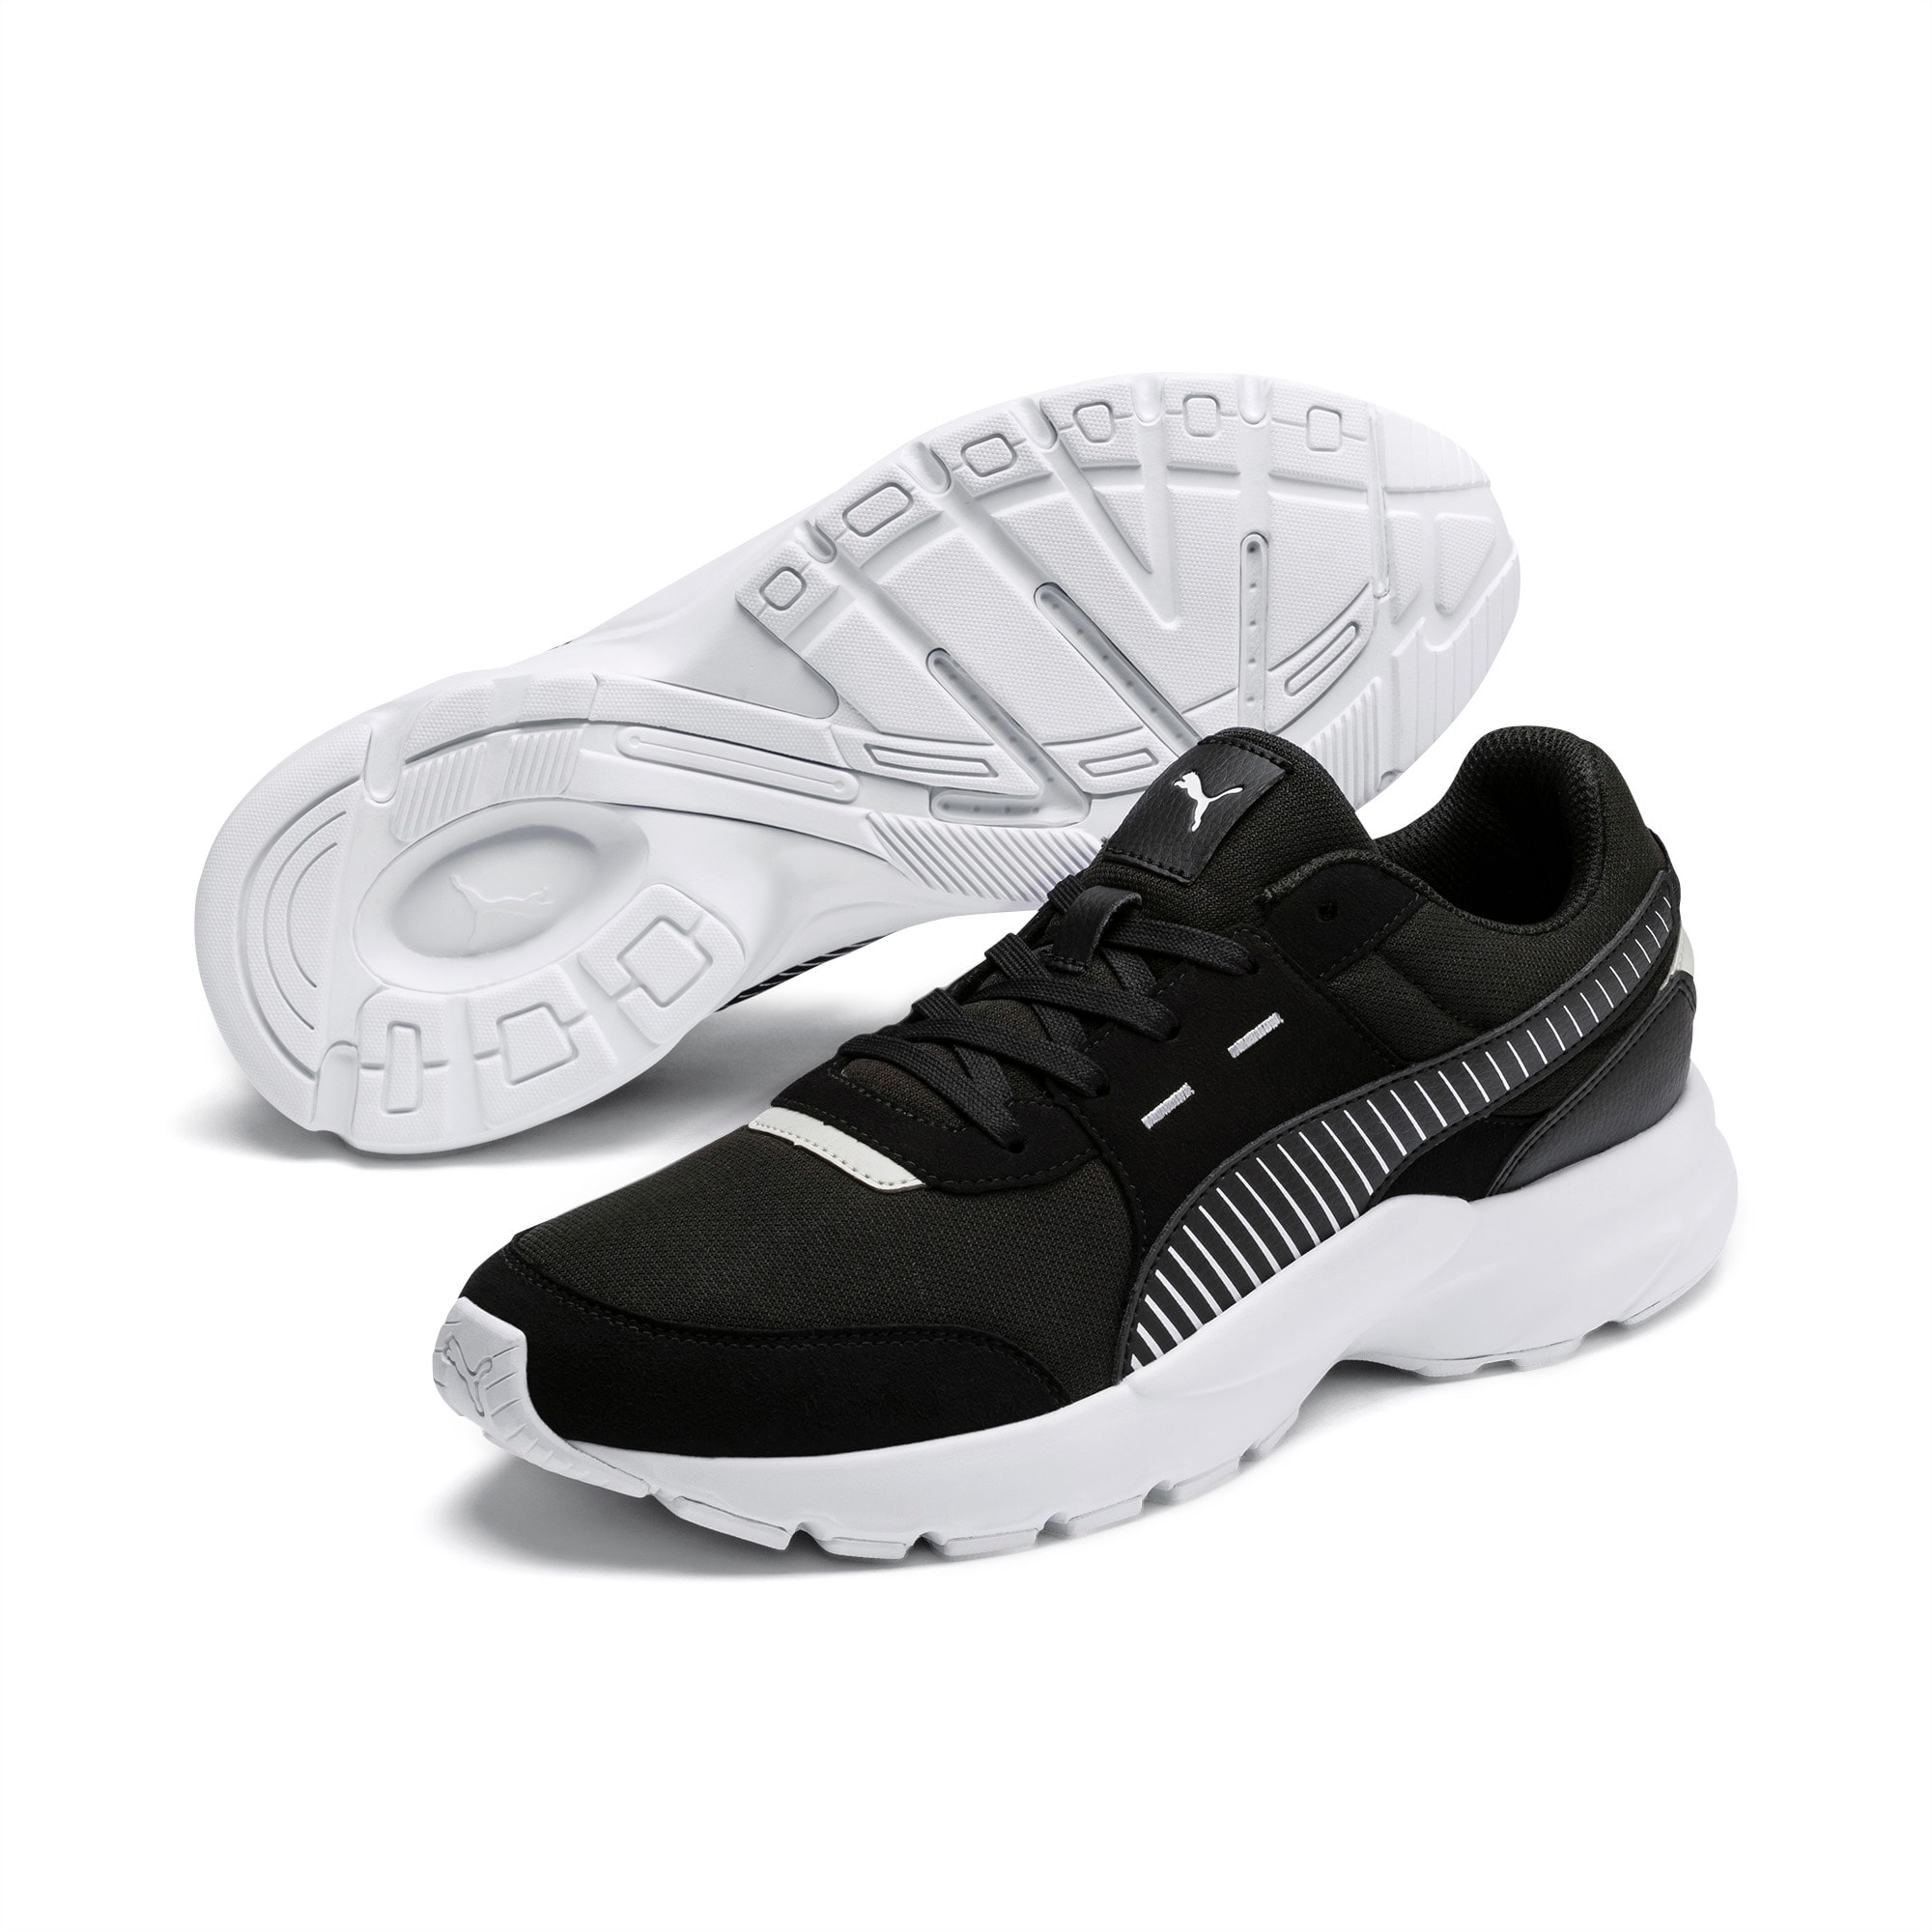 Future Runner Trainers | P.Black-P. Black-P. White | PUMA Shoes | PUMA